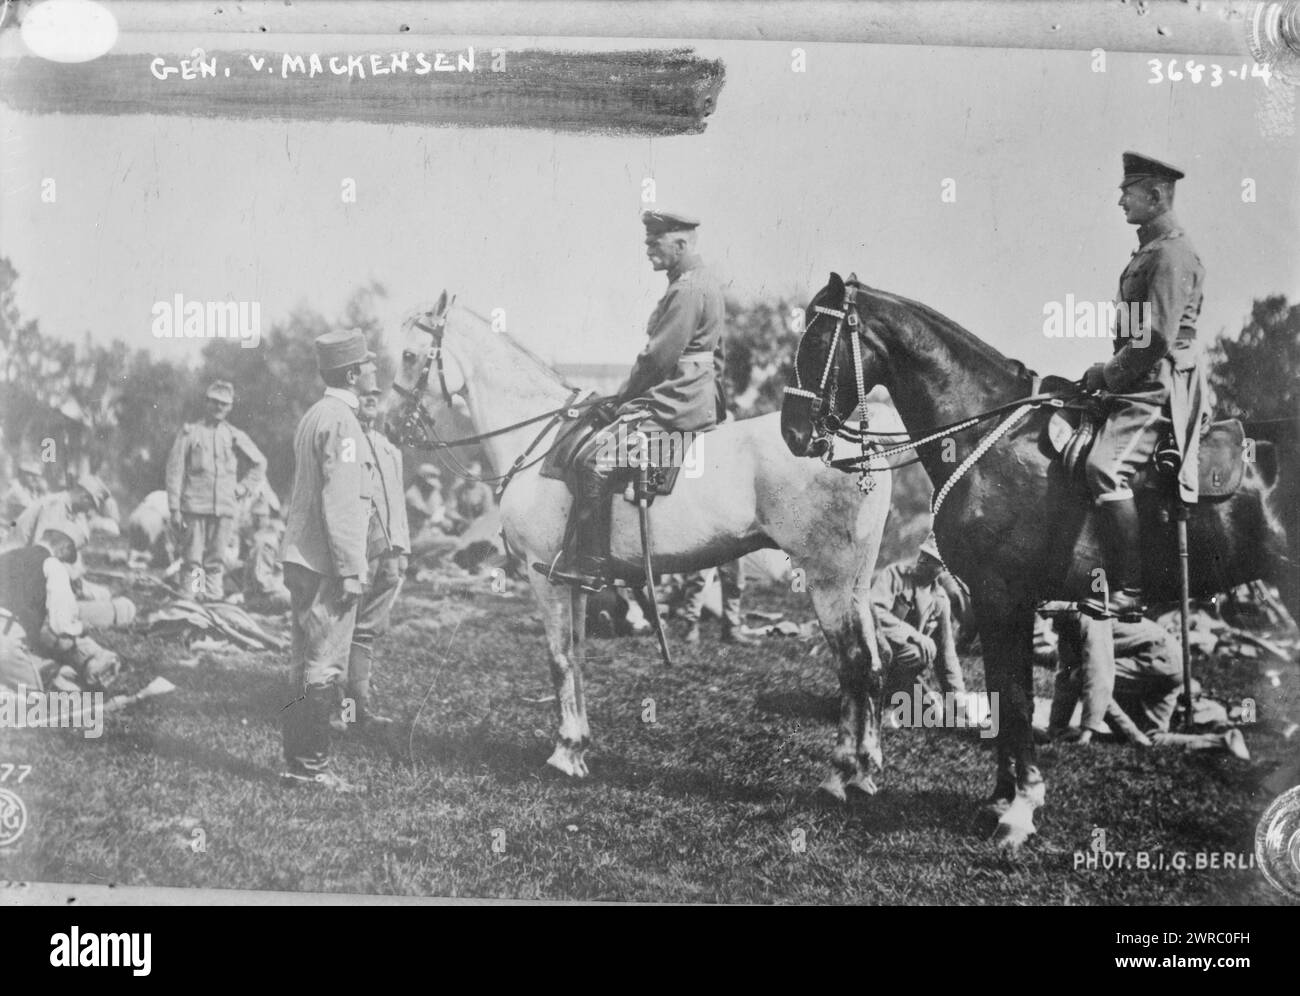 Gen. V. Mackensen, Photograph shows Anton Ludwig August von Mackensen (1849-1945), was a German field marshal during World War I., between ca. 1910 and ca. 1915, Glass negatives, 1 negative: glass Stock Photo